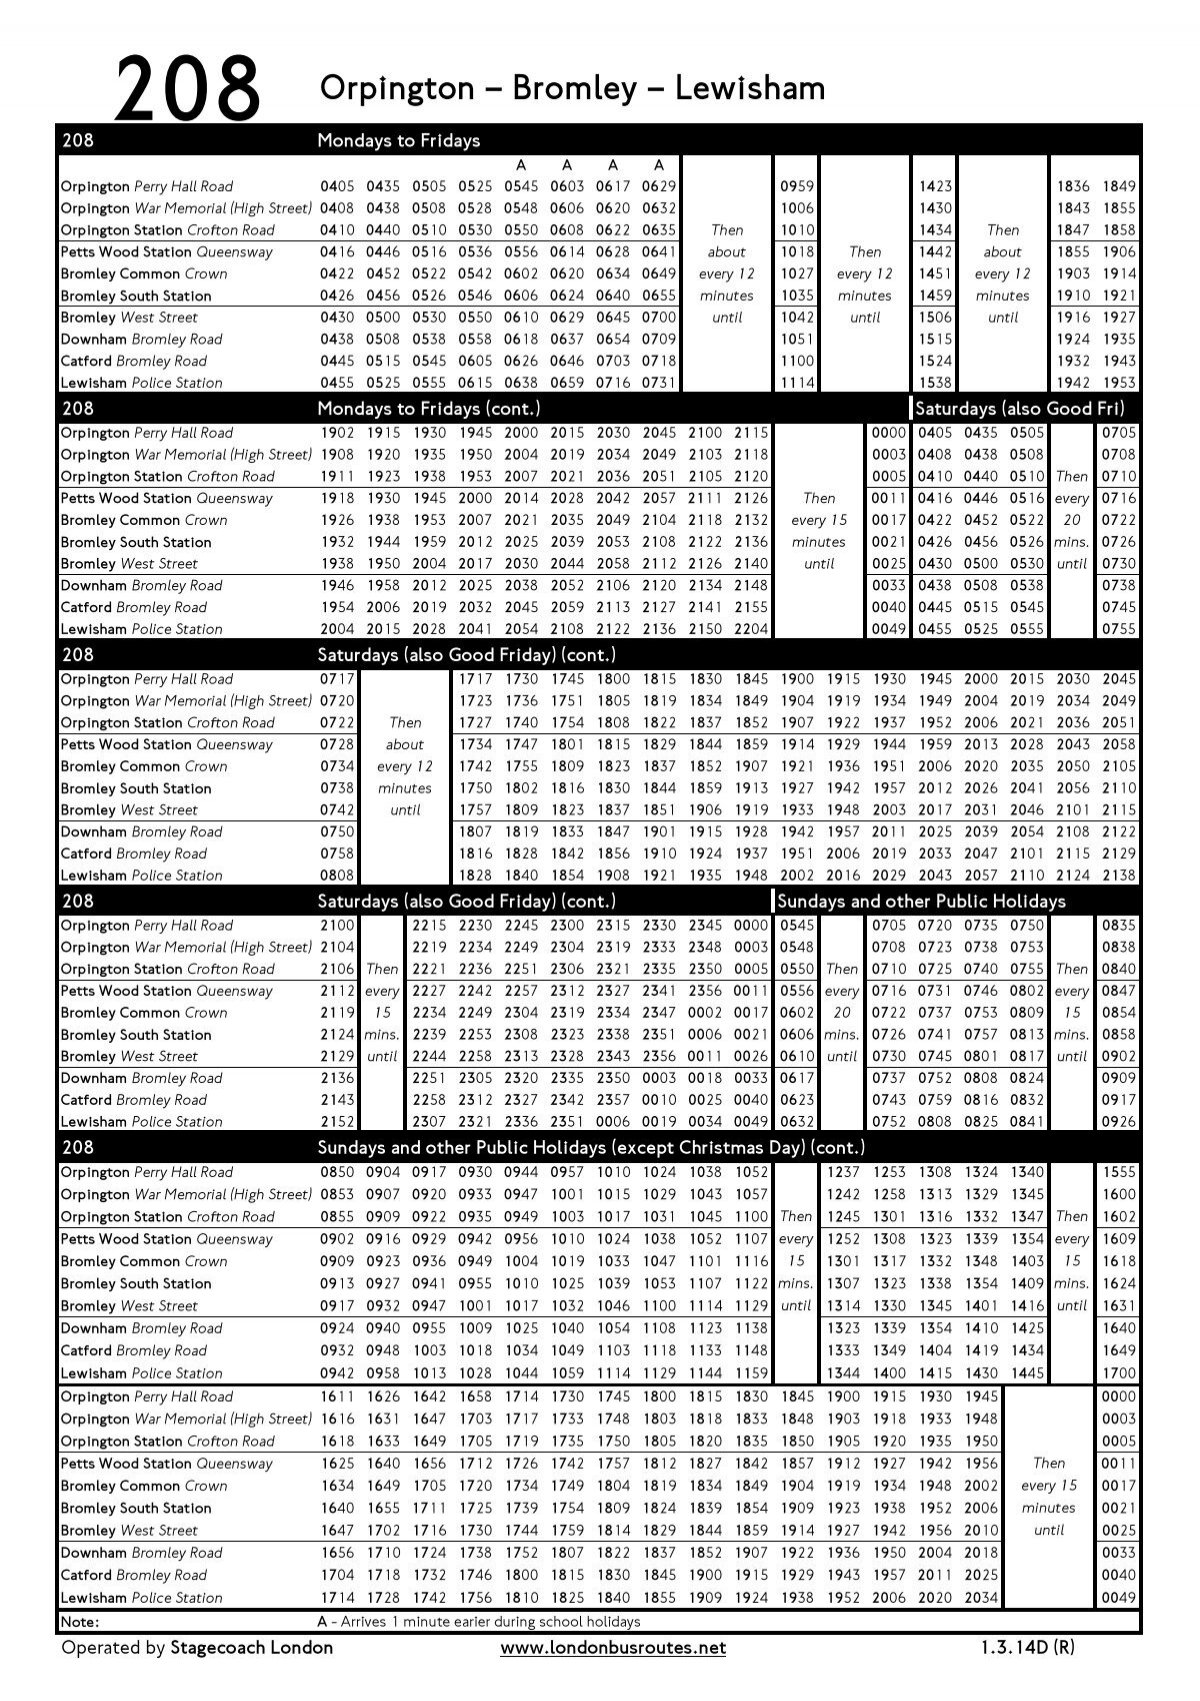 208 timetable - London Bus Routes